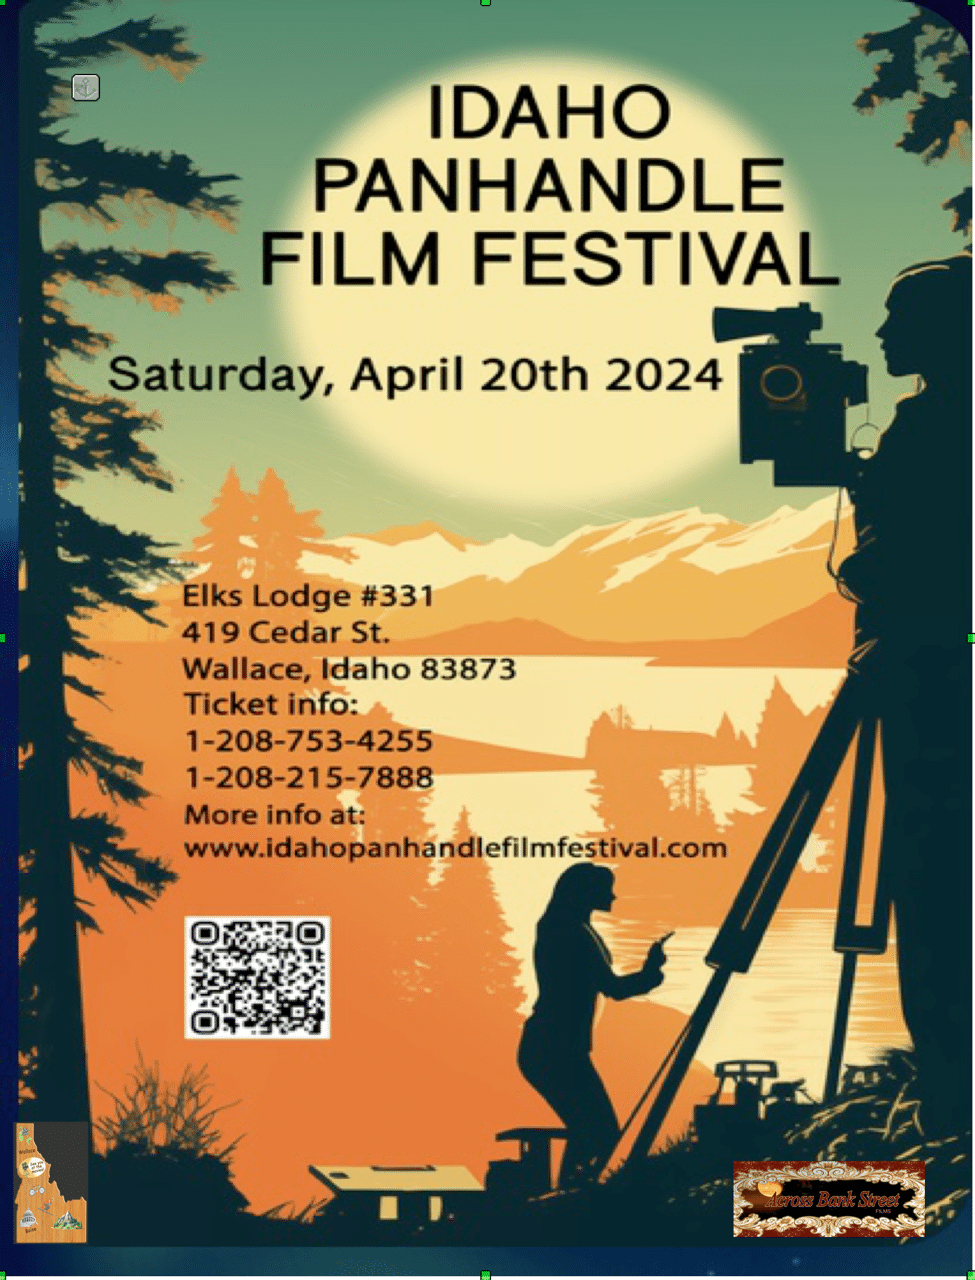 Idaho Panhandle Film Festival